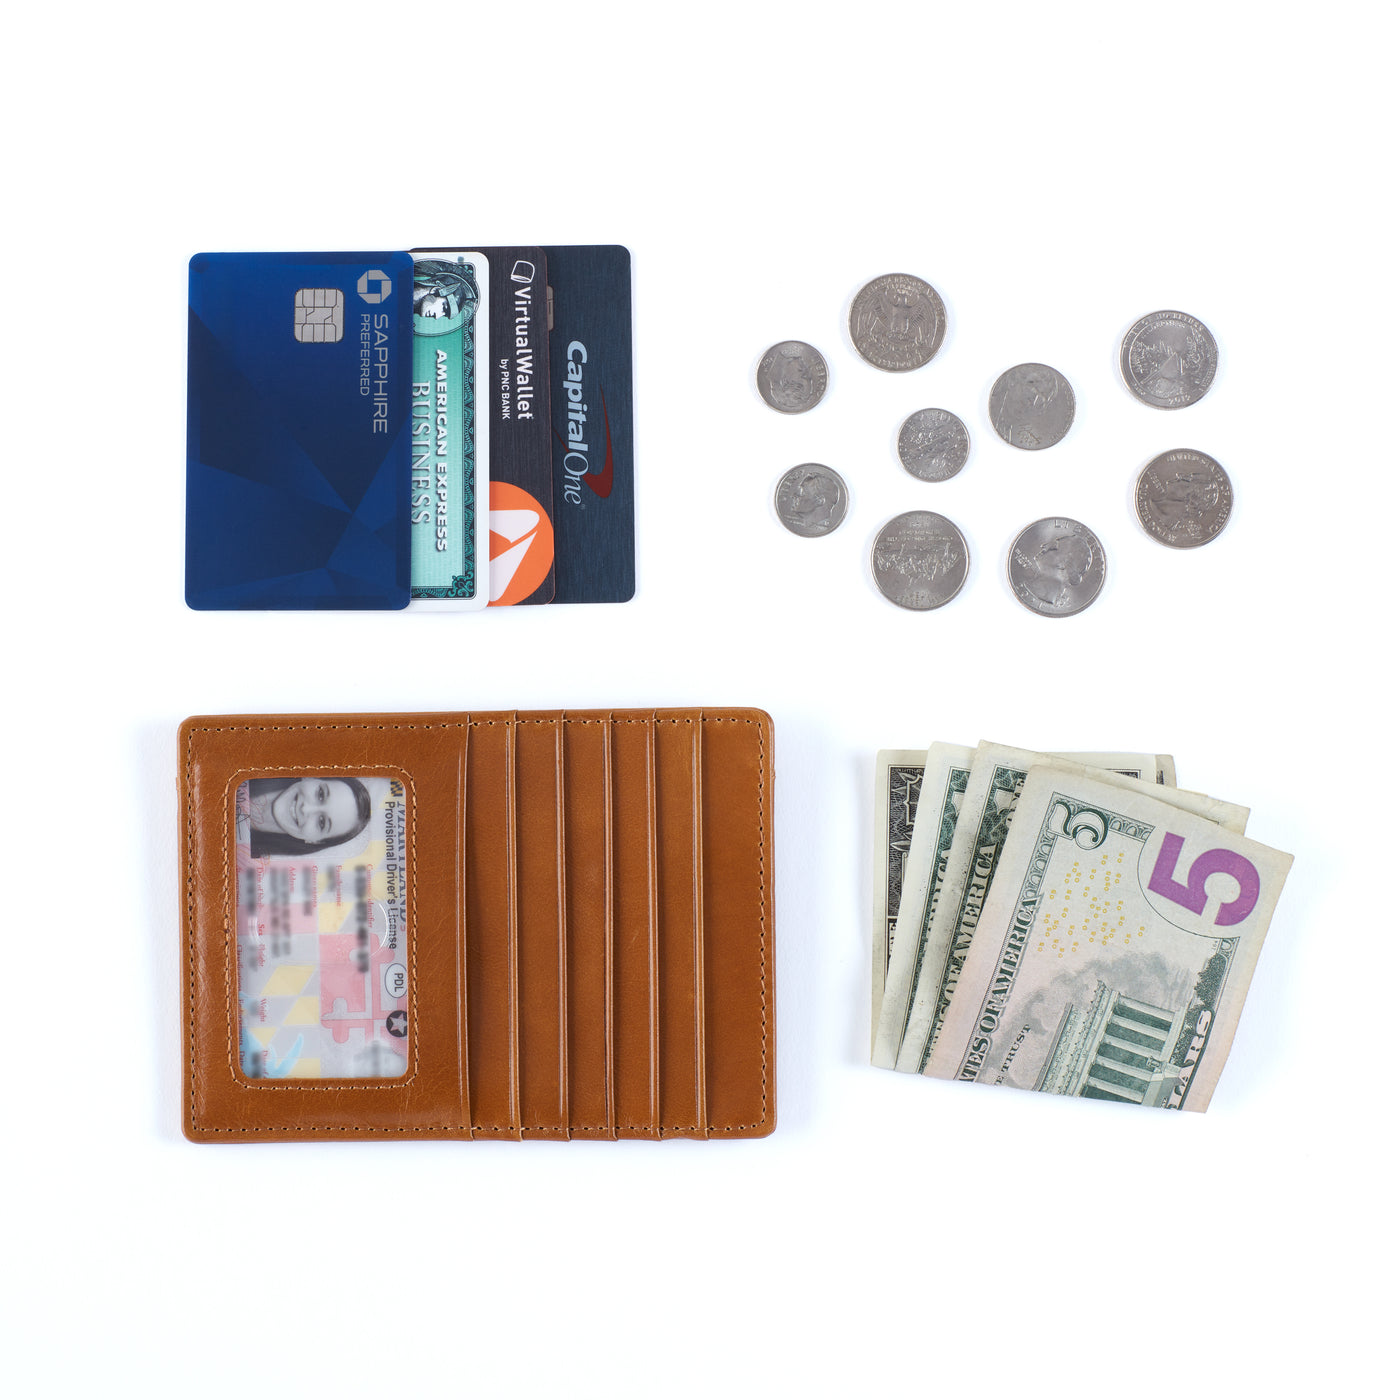 Euro Slide Card Case in Metallic Leather - Strawberry Fields